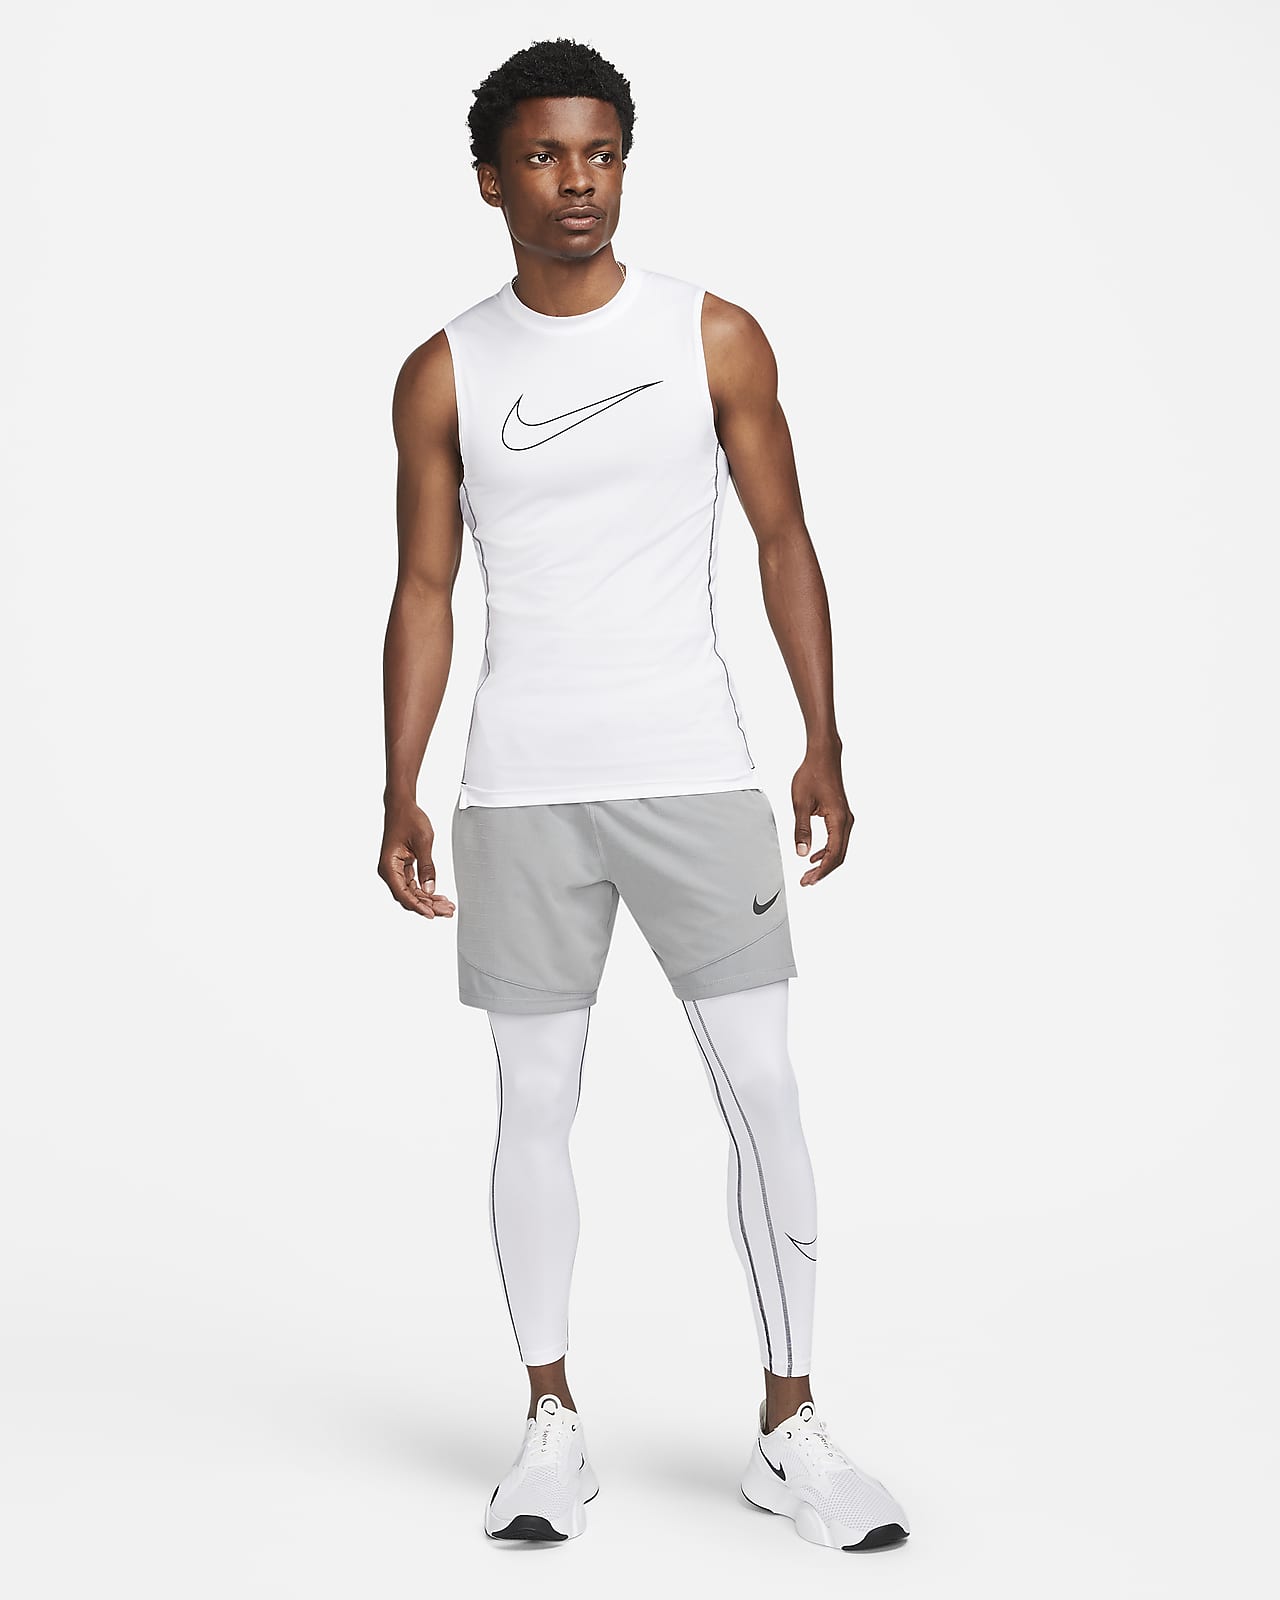 Nike Pro Men's Sleeveless Top